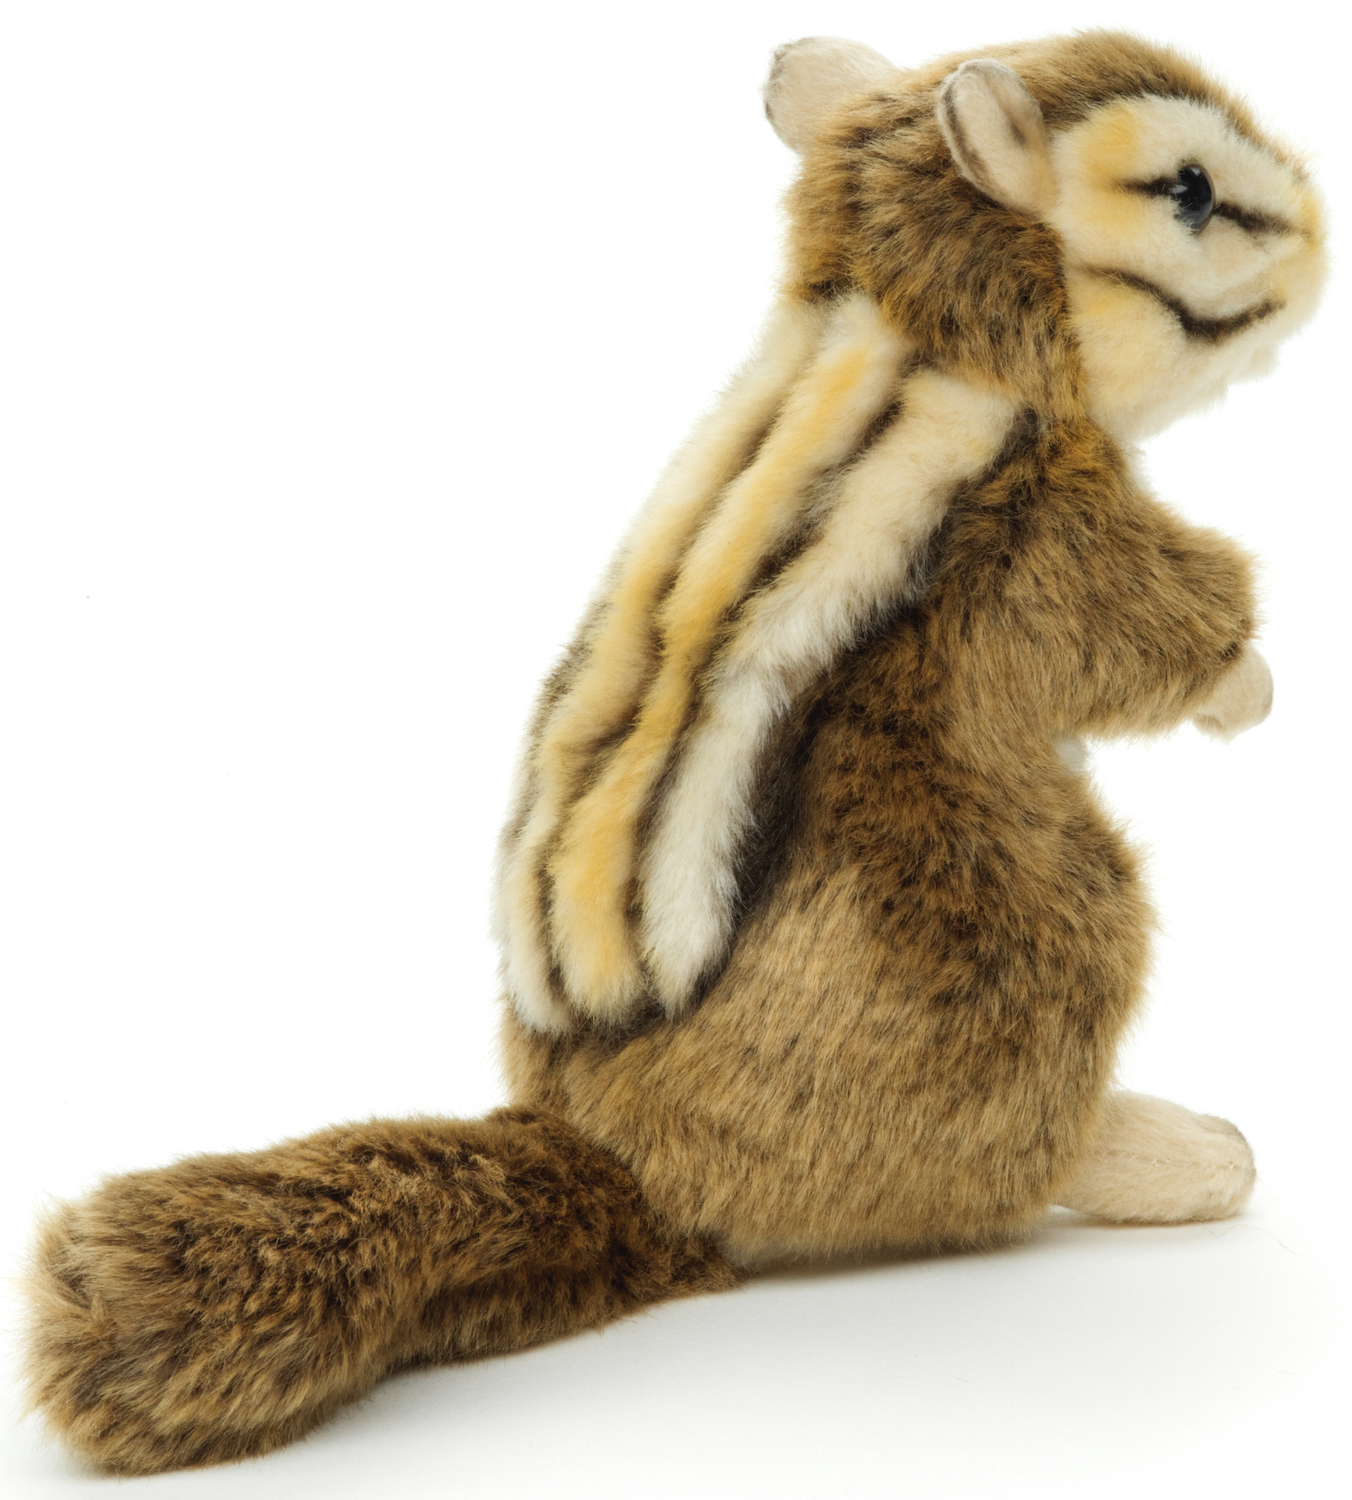  Chipmunk, standing - 18 cm (height) - plush rodent, chipmunk - soft toy, cuddly toy